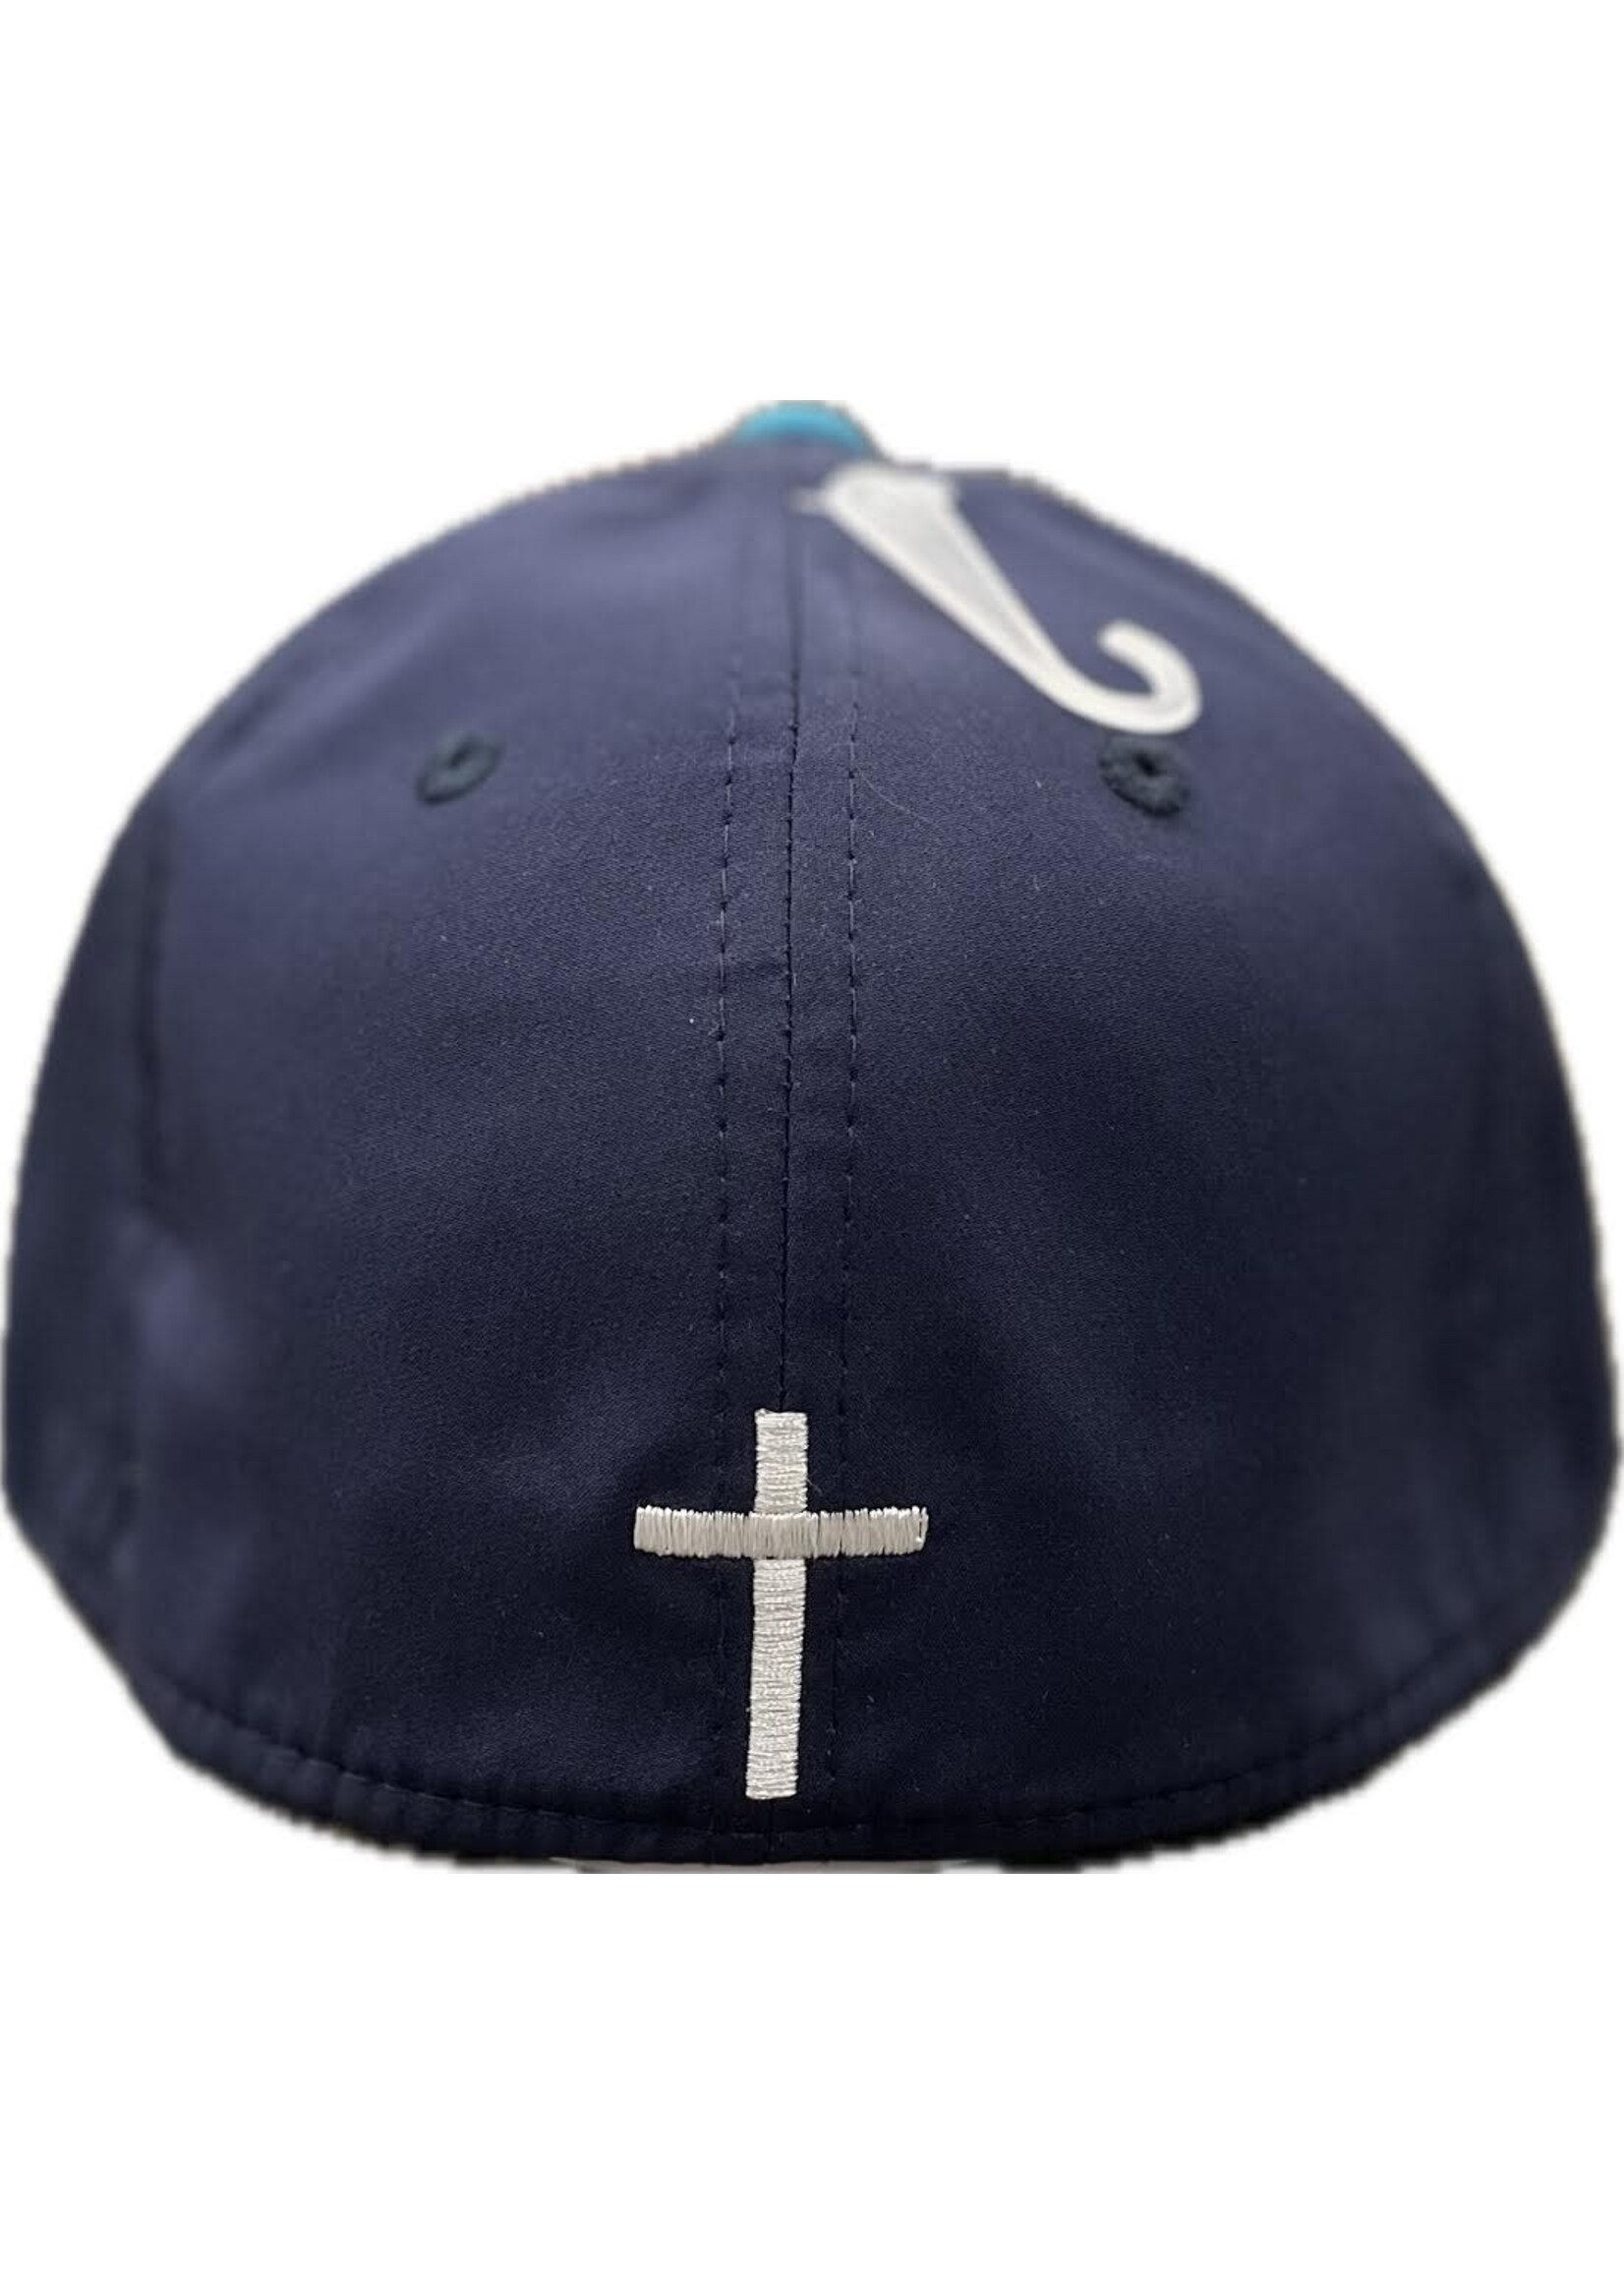 NON-UNIFORM Hat-Baseball Flat Brim Fitted Cap, Navy/White